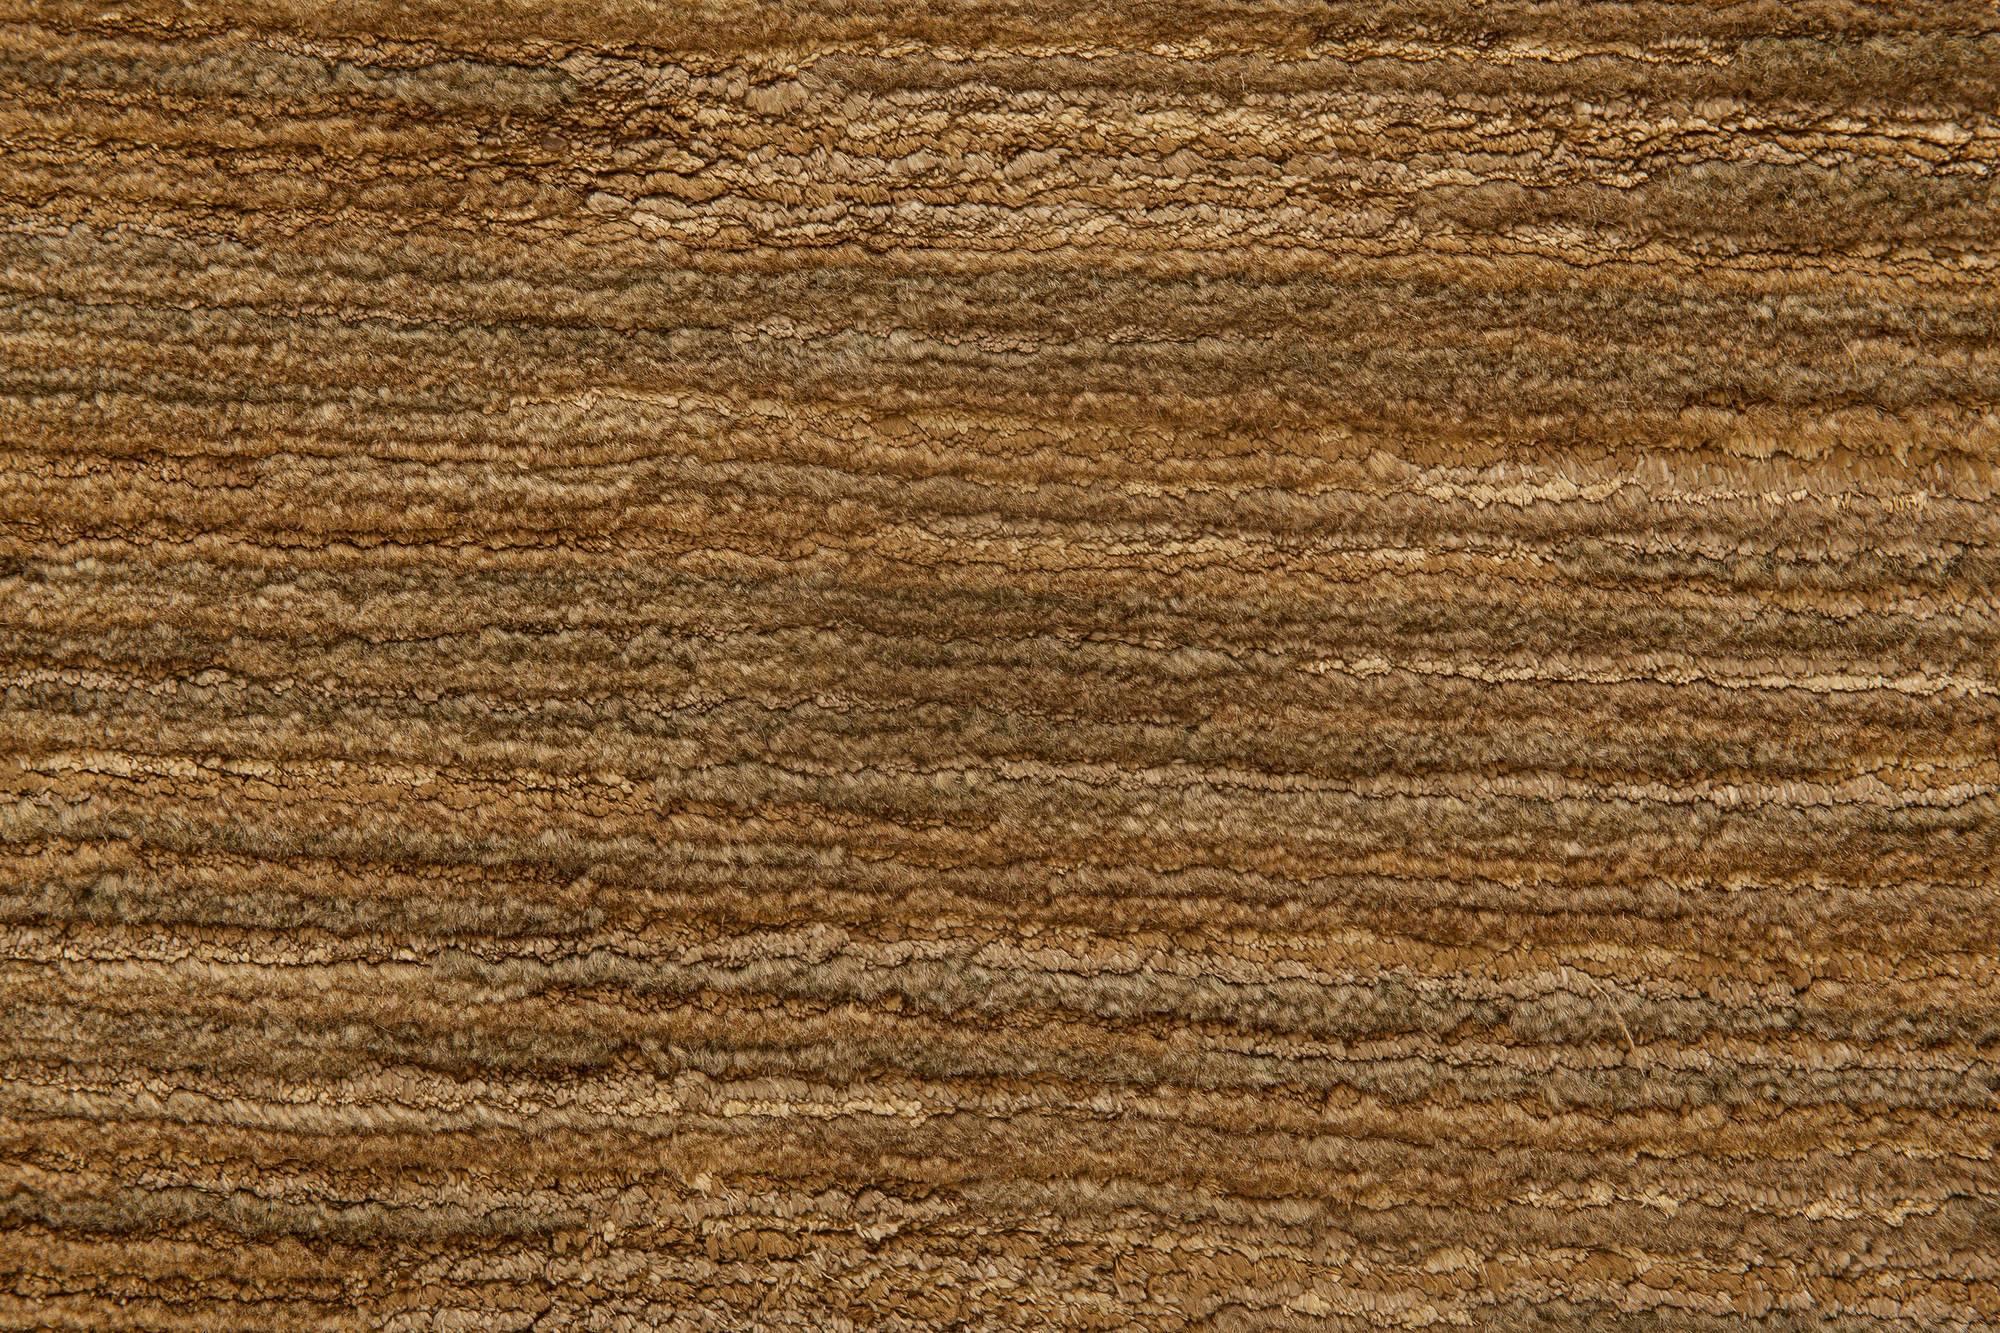 Contemporary M Group design brown handmade rug by Doris Leslie Blau
Size: 8'0